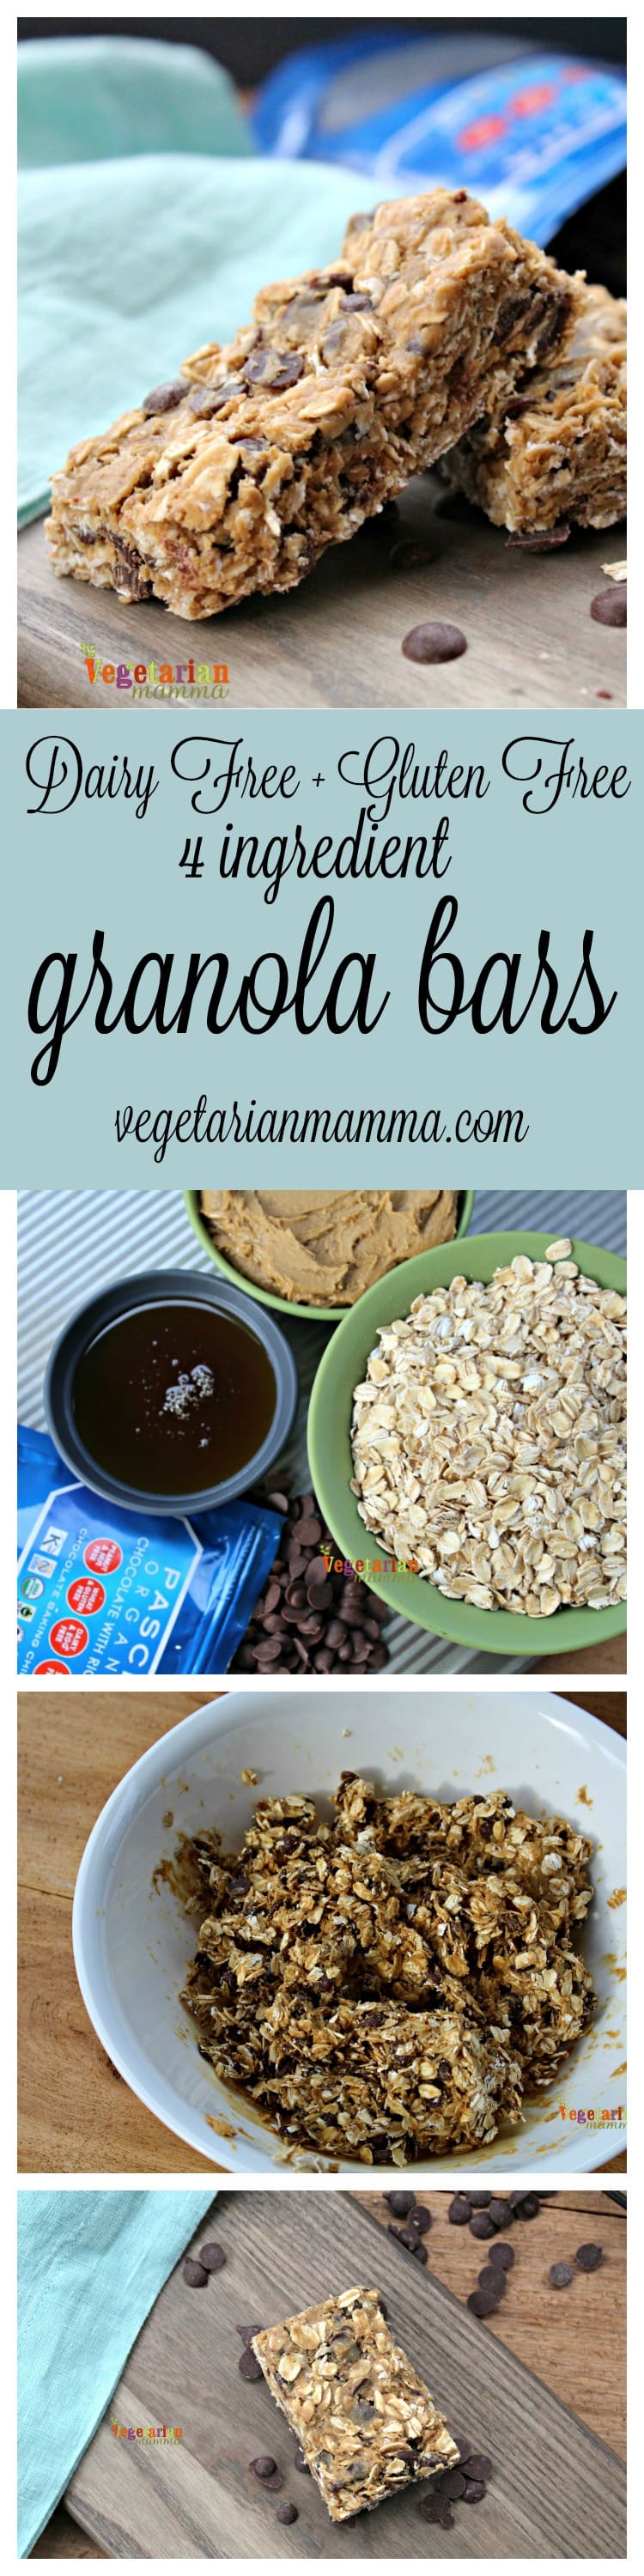 Gluten Free, Nut Free, Dairy Free Granola Bars